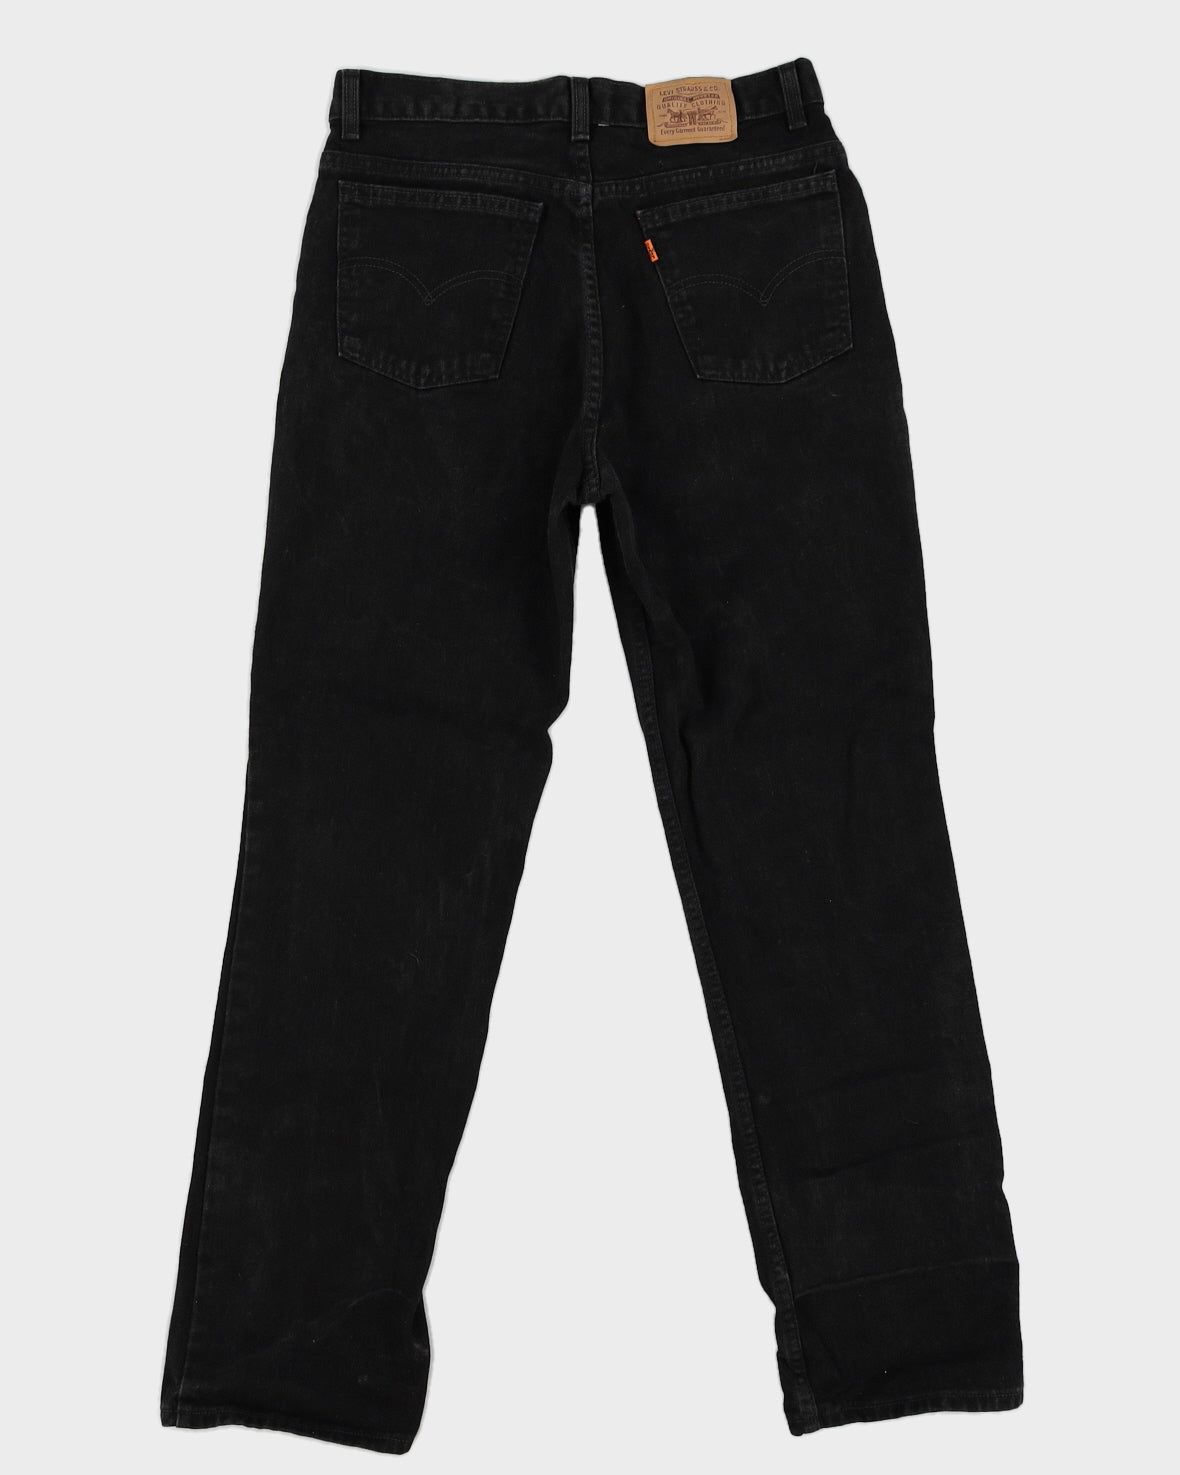 Vintage 80s 550 Levi's Orange Tab Black Jeans - W32 L32